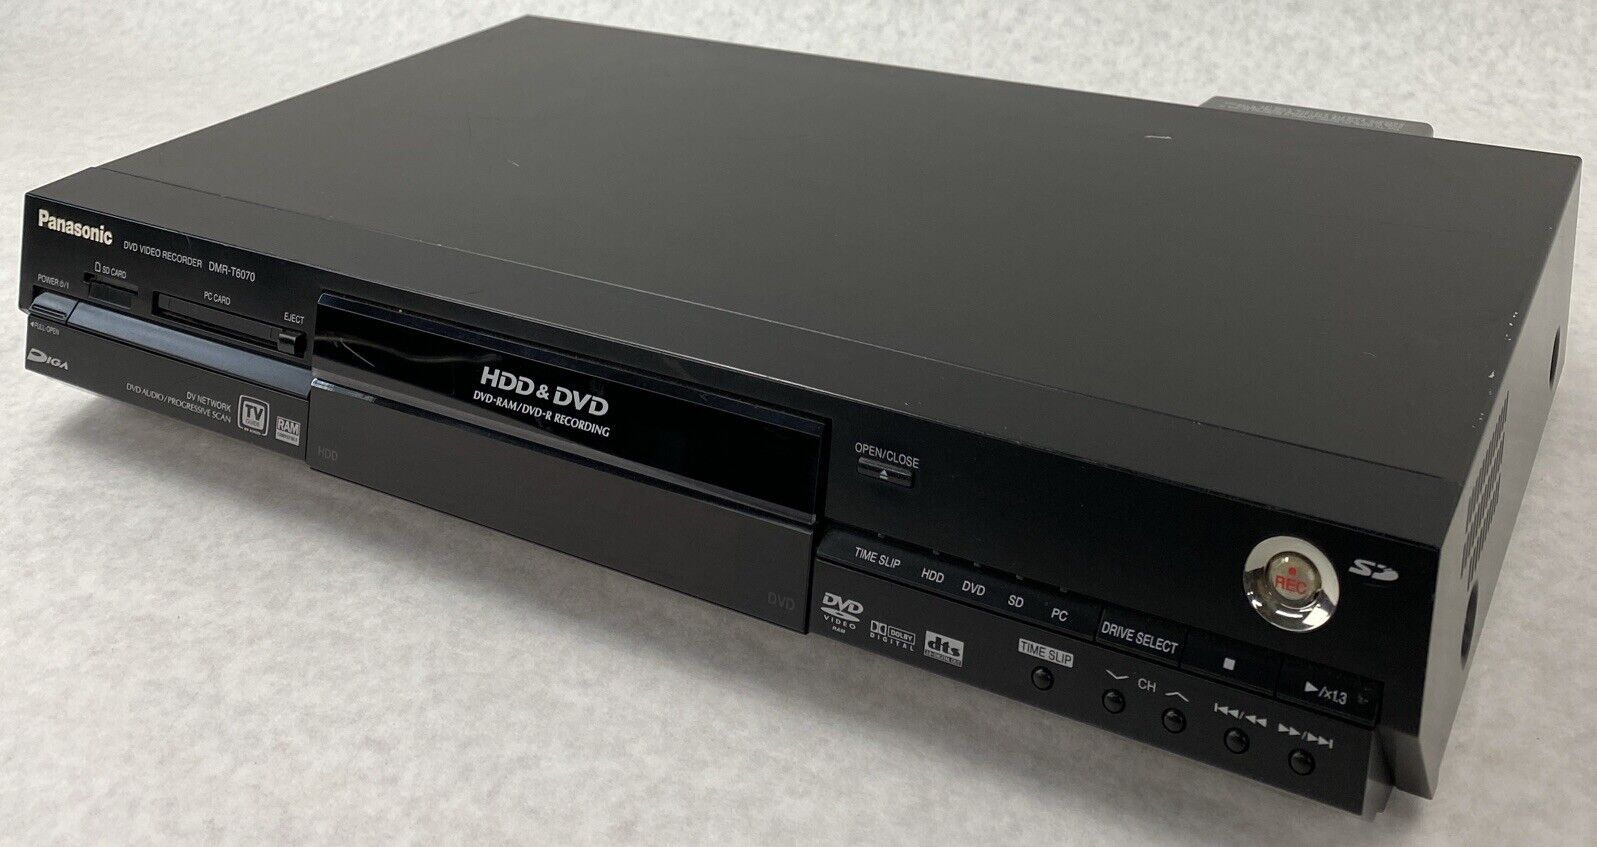 Panasonic DMR-T6070 DVD Recorder with Original Hard Drive but NO REMOTE